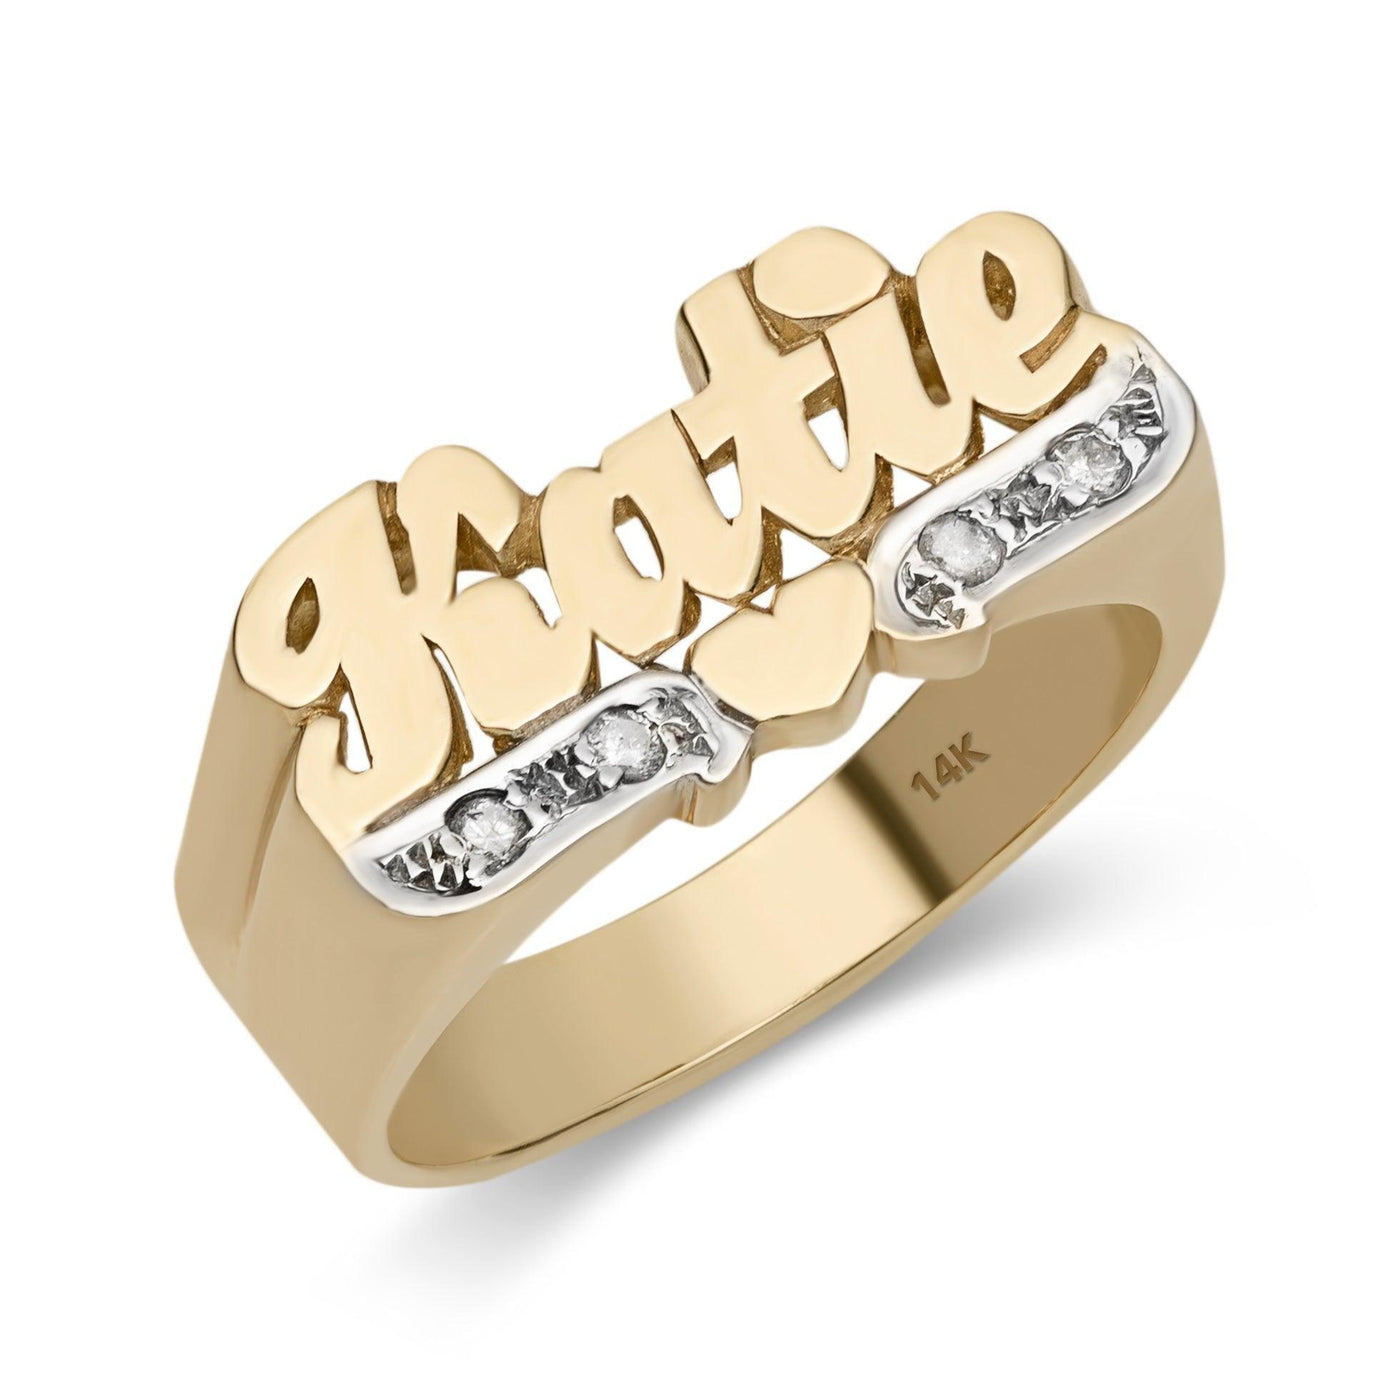 Name Ring with Diamond Heart Ribbon 14K Gold - Style 12 - bayamjewelry